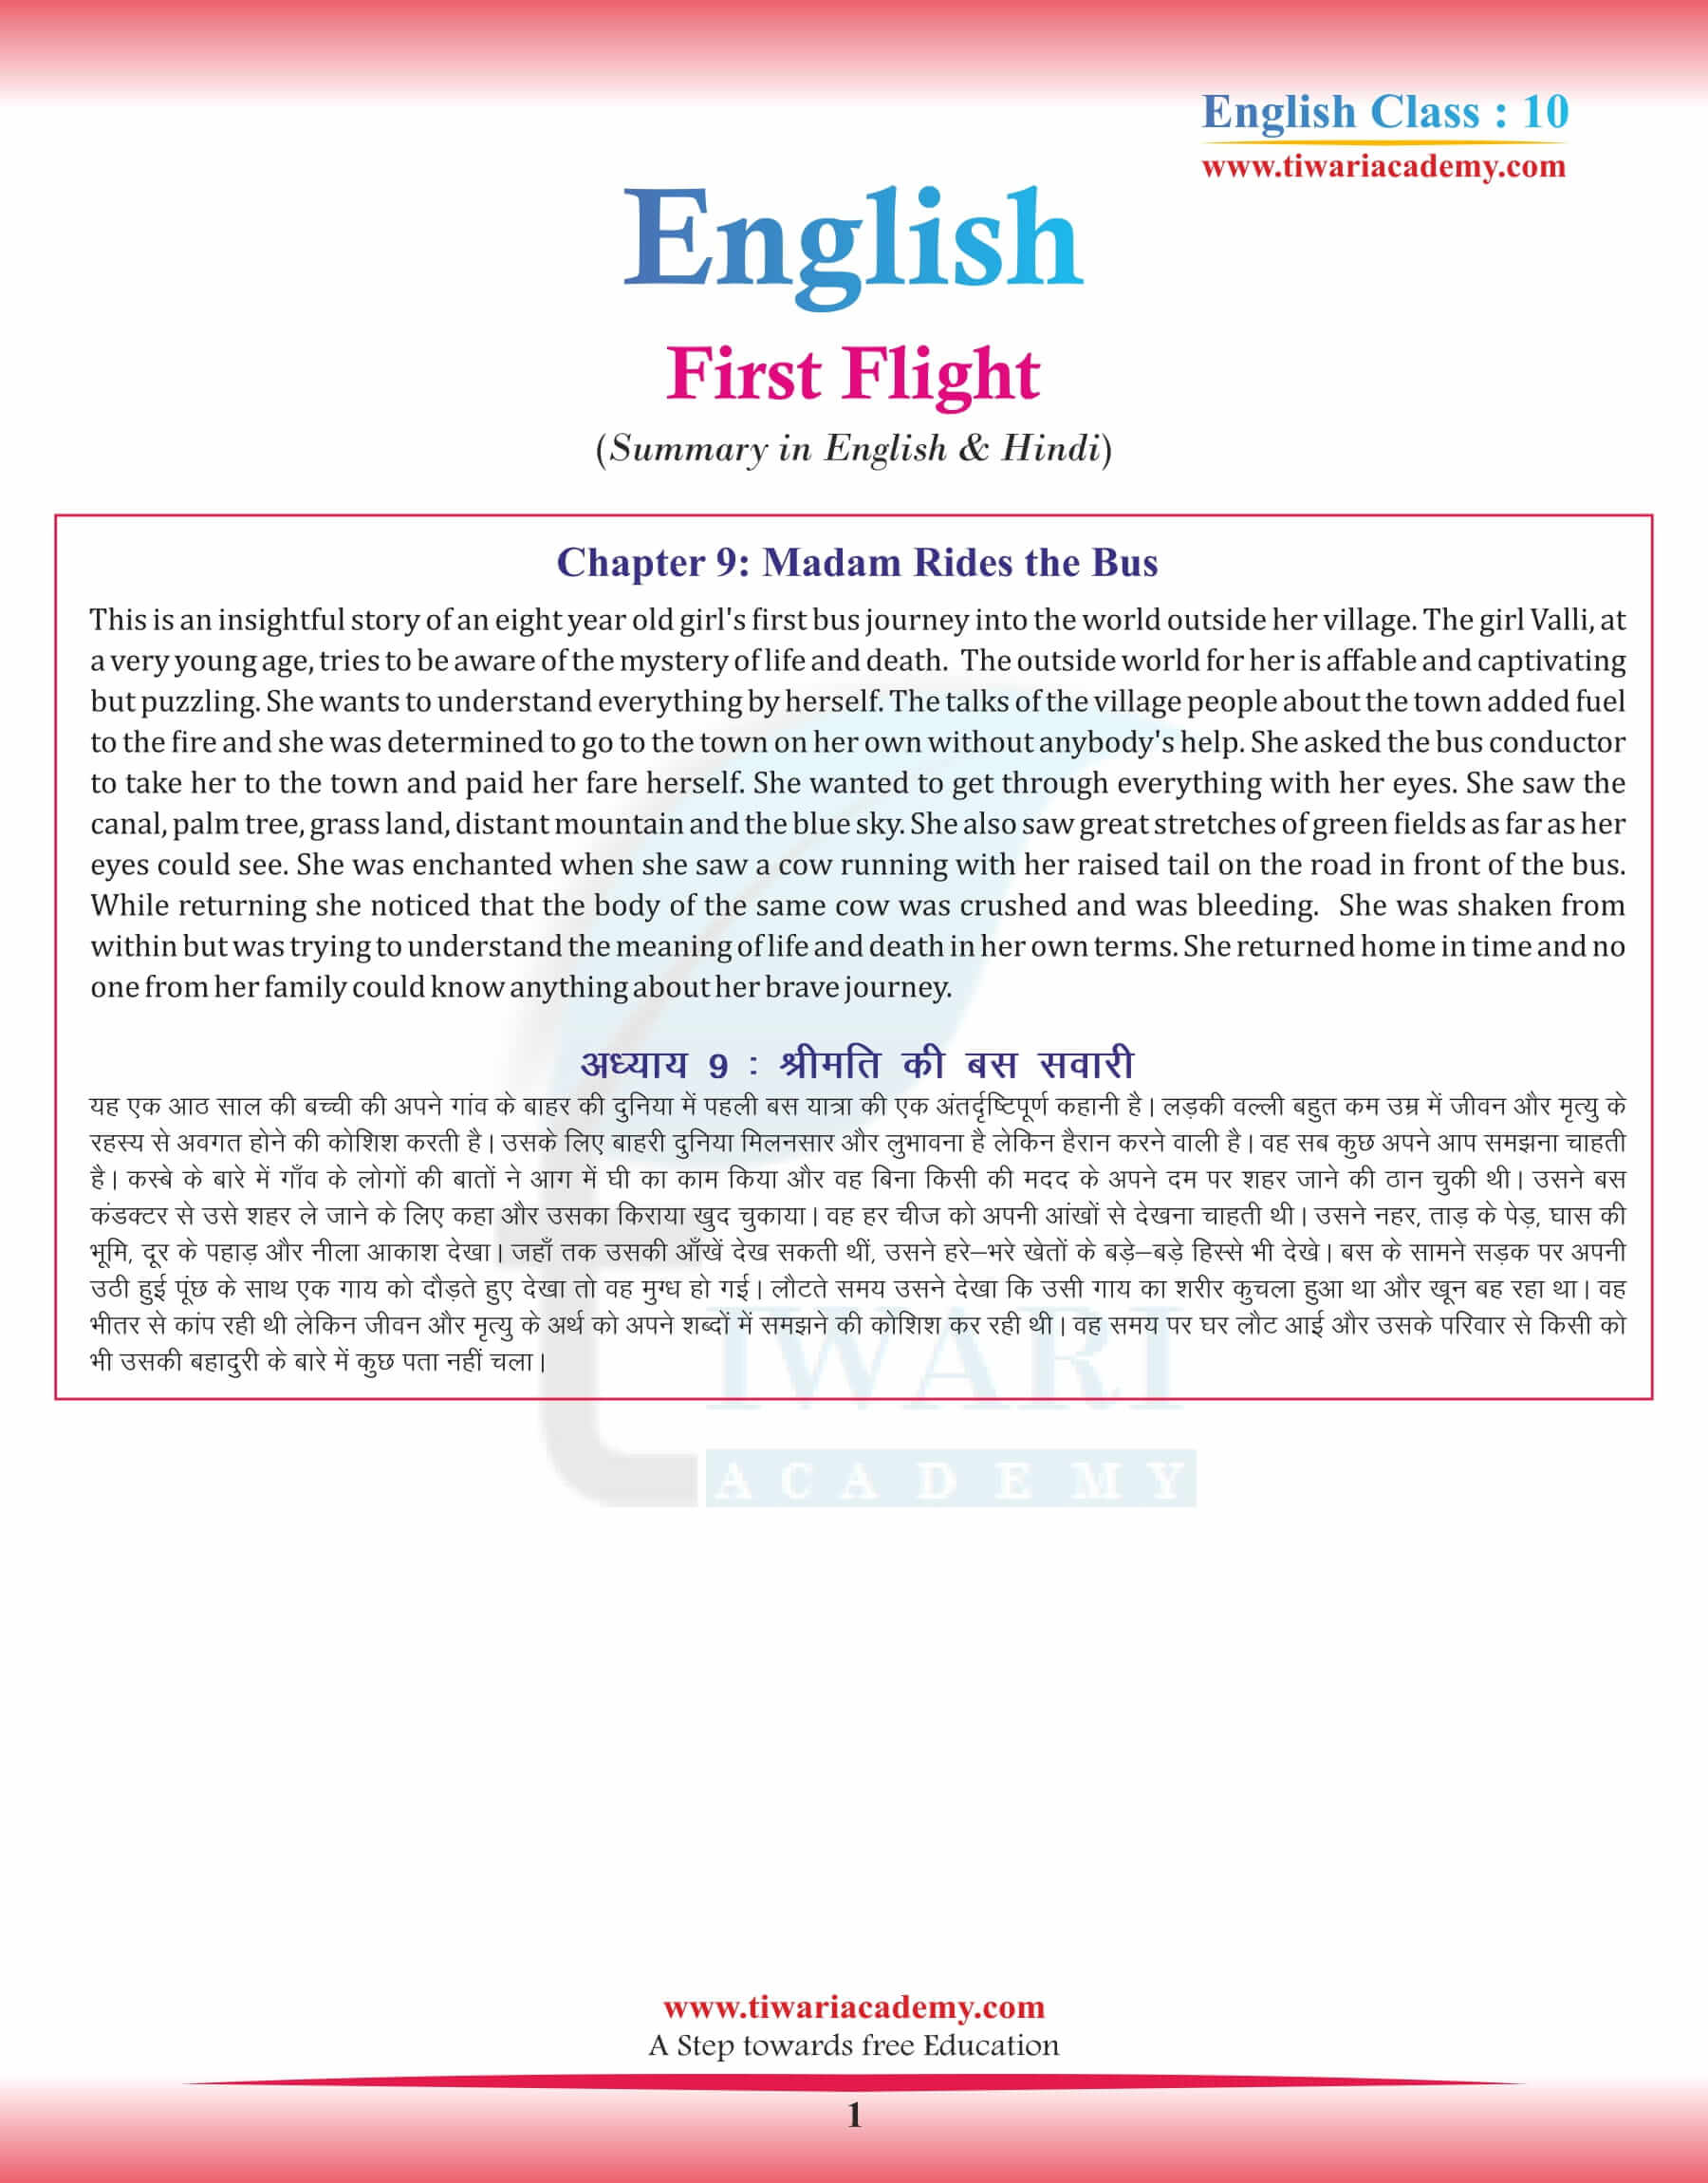 Class 10 English Chapter 9 Summary in Hindi